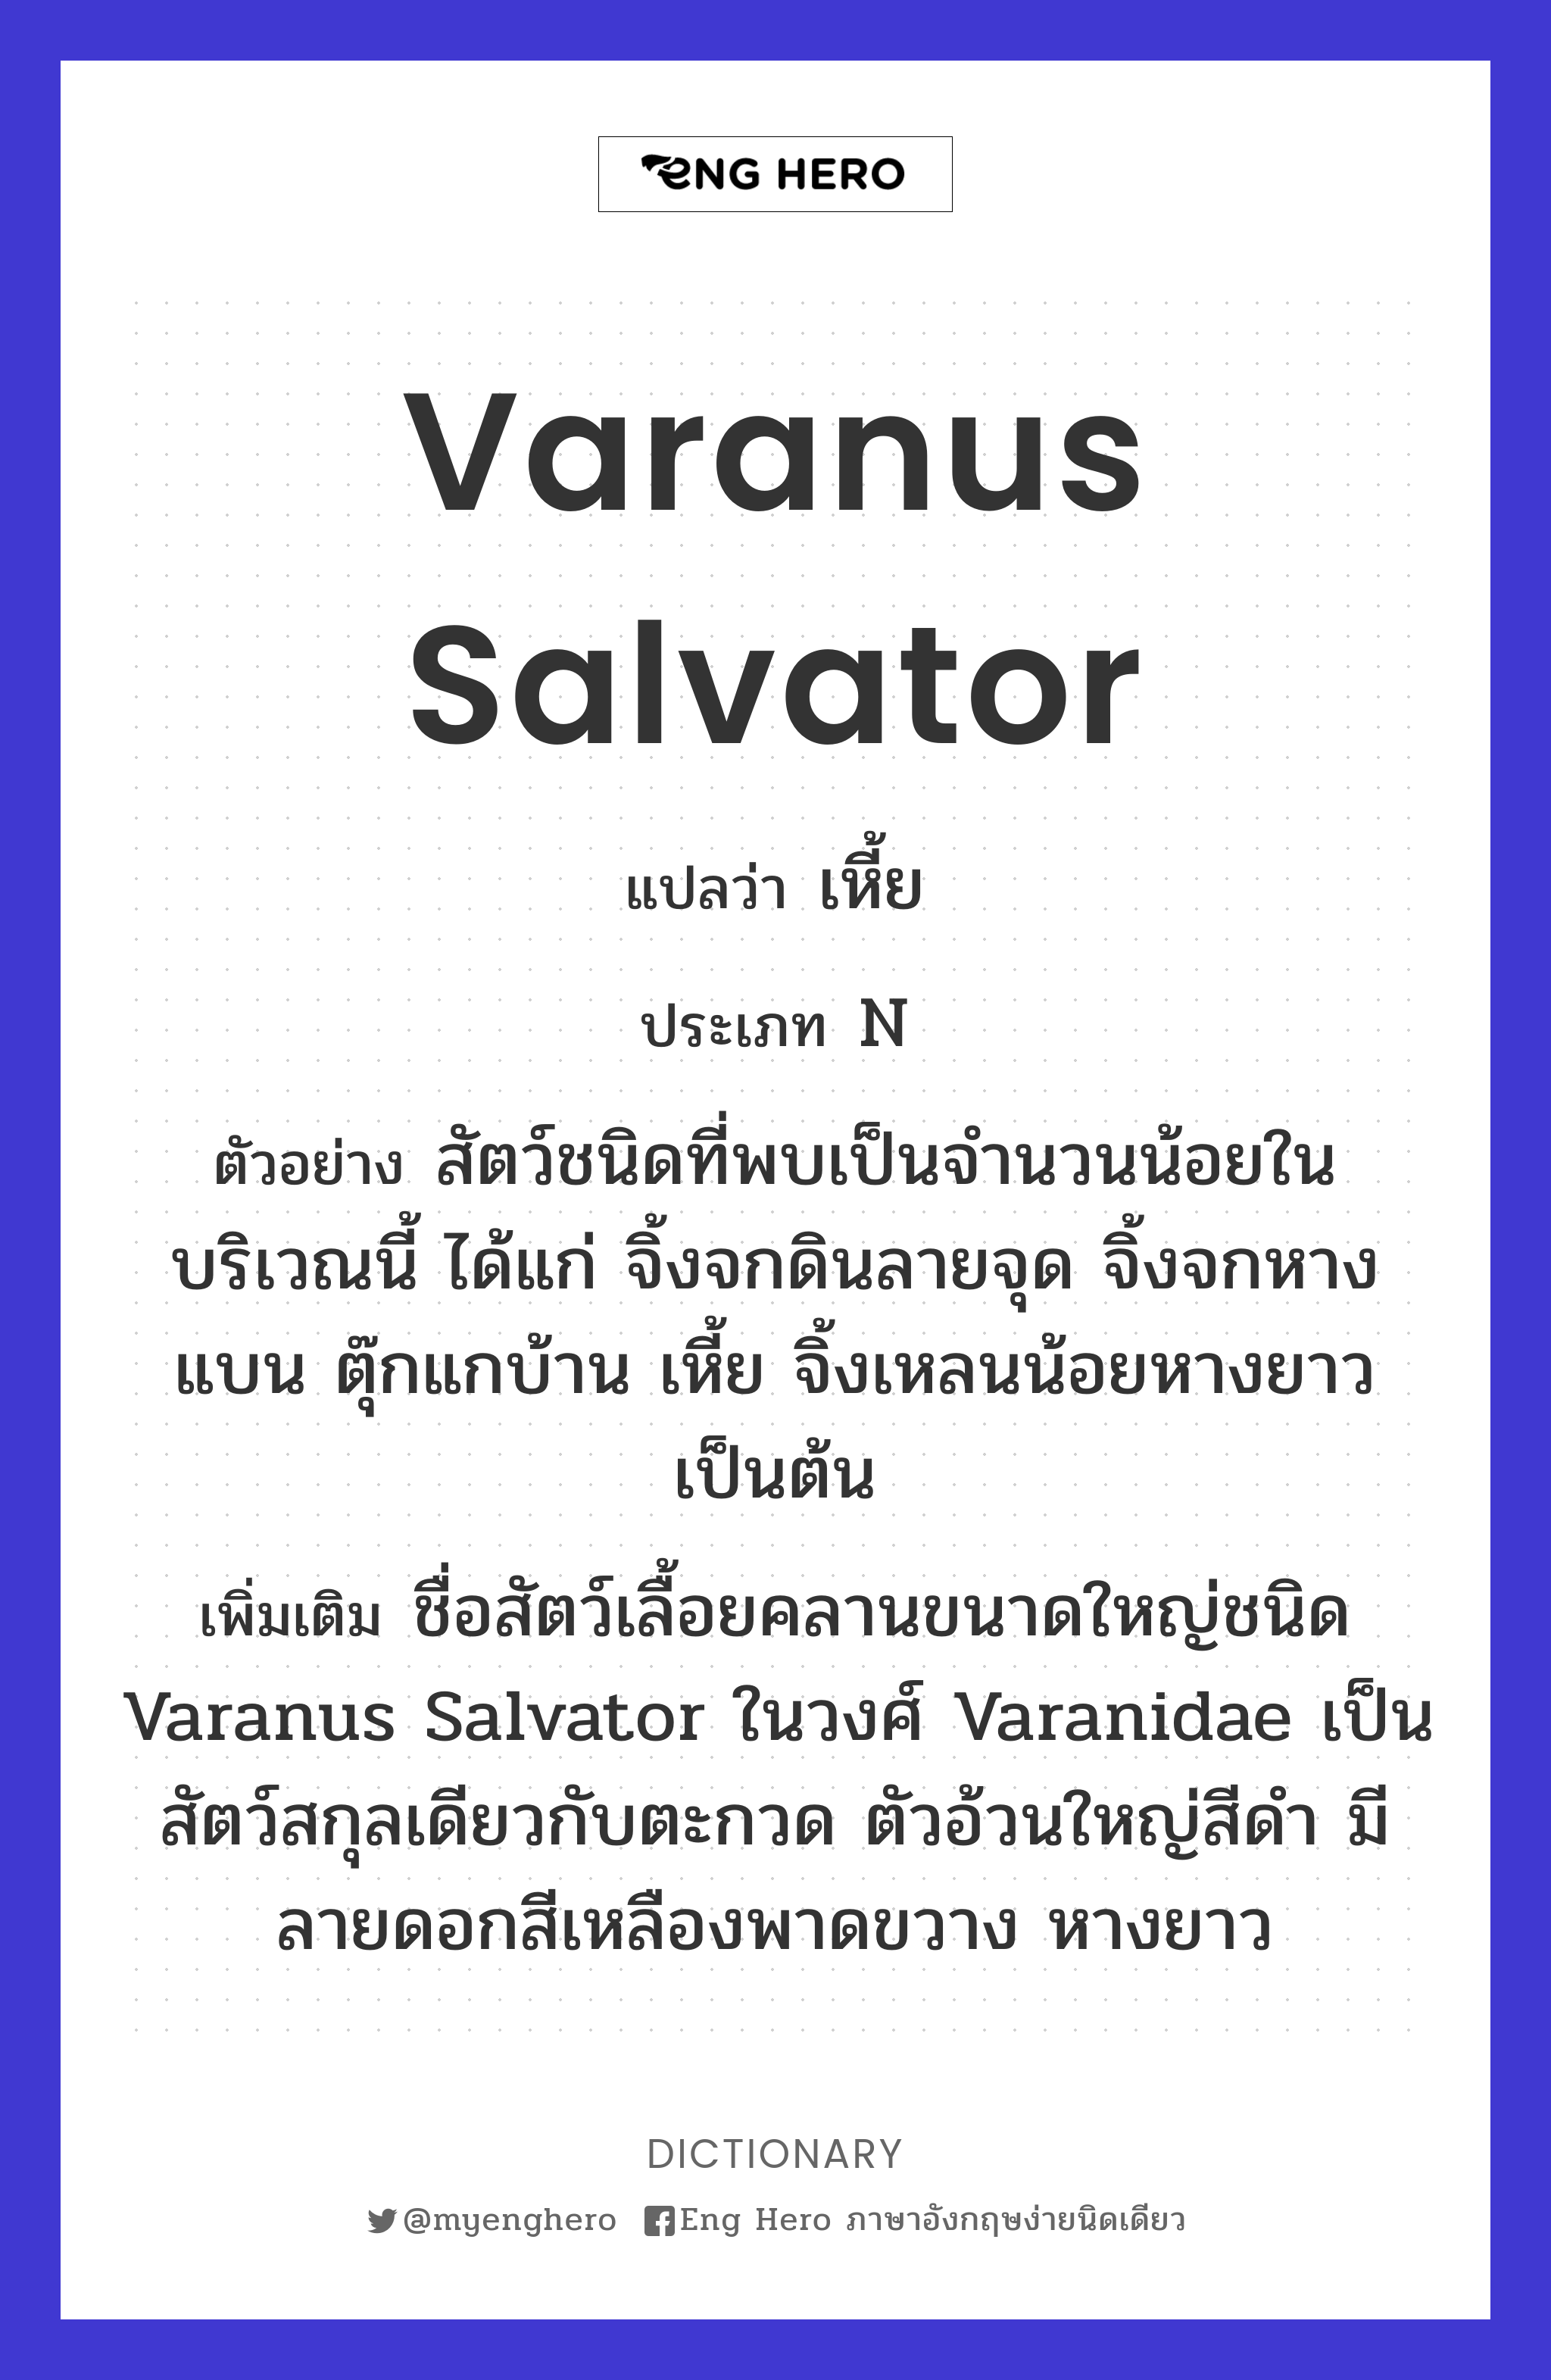 Varanus salvator